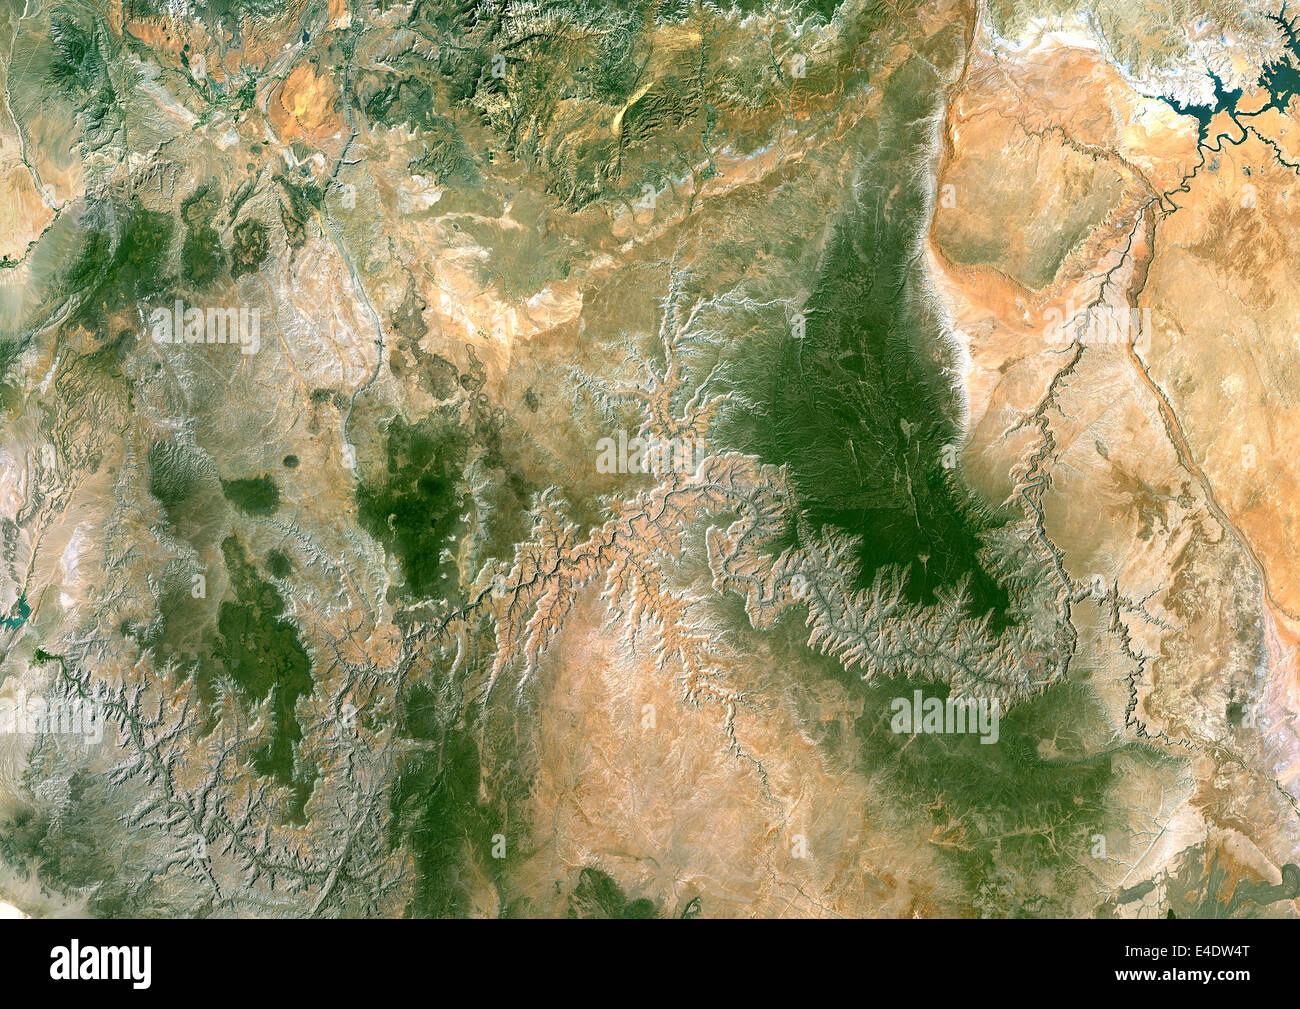 Glen Canyon Of Colorado And Lake Powell, Utah & Arizona, Usa, True Colour Satellite Image. Satellite image of the Glen Canyon, c Stock Photo